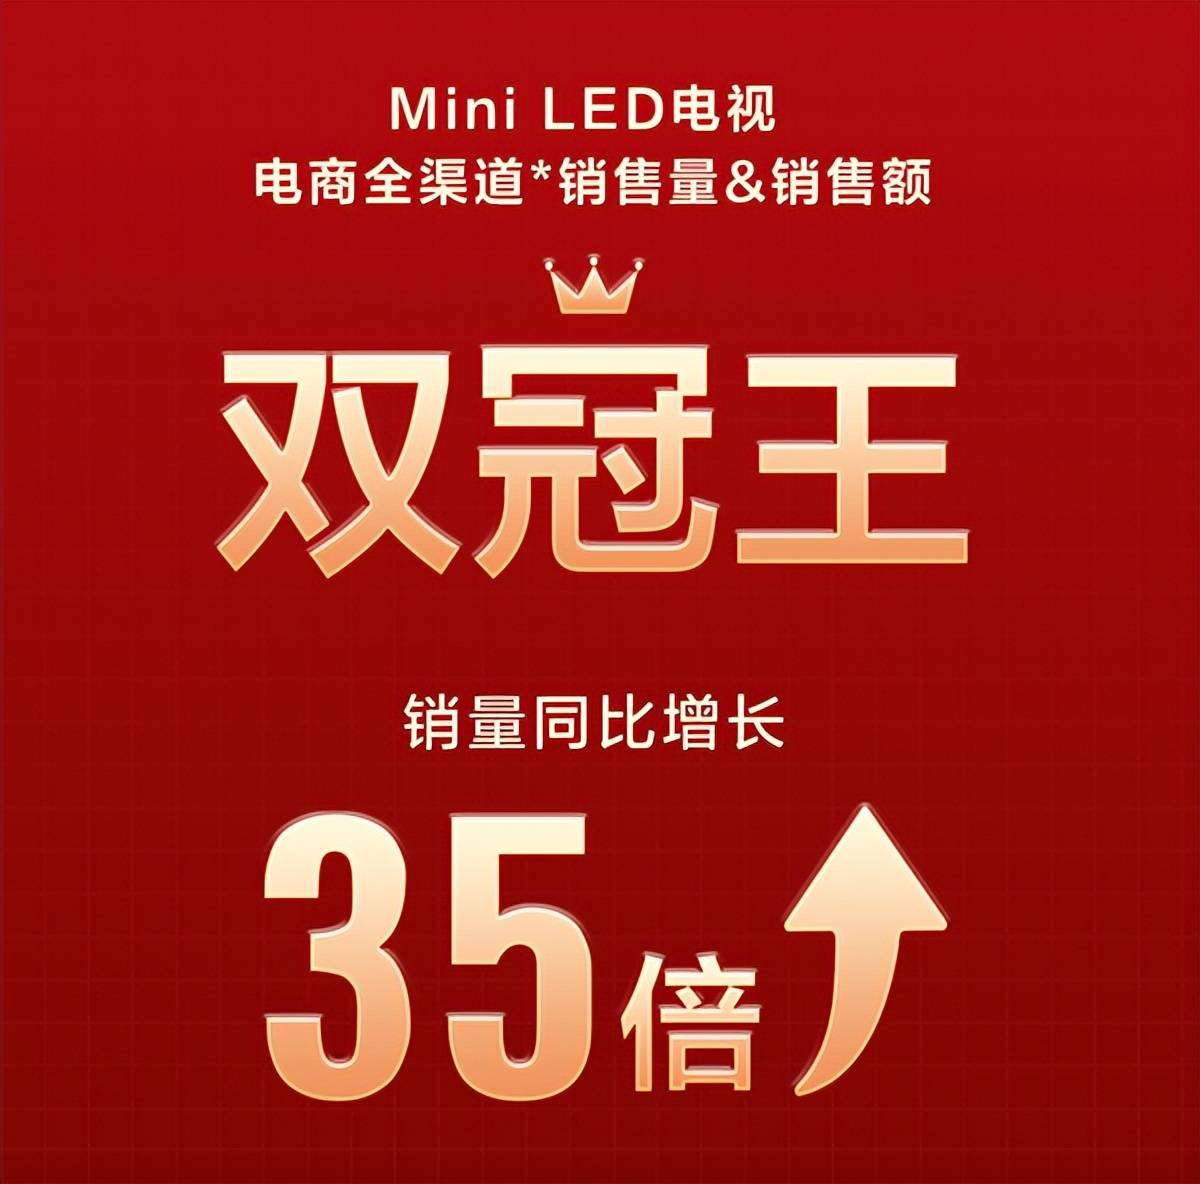 Mini LED显示屏市场迎来井喷期，到底哪个品牌能够拔得头筹？